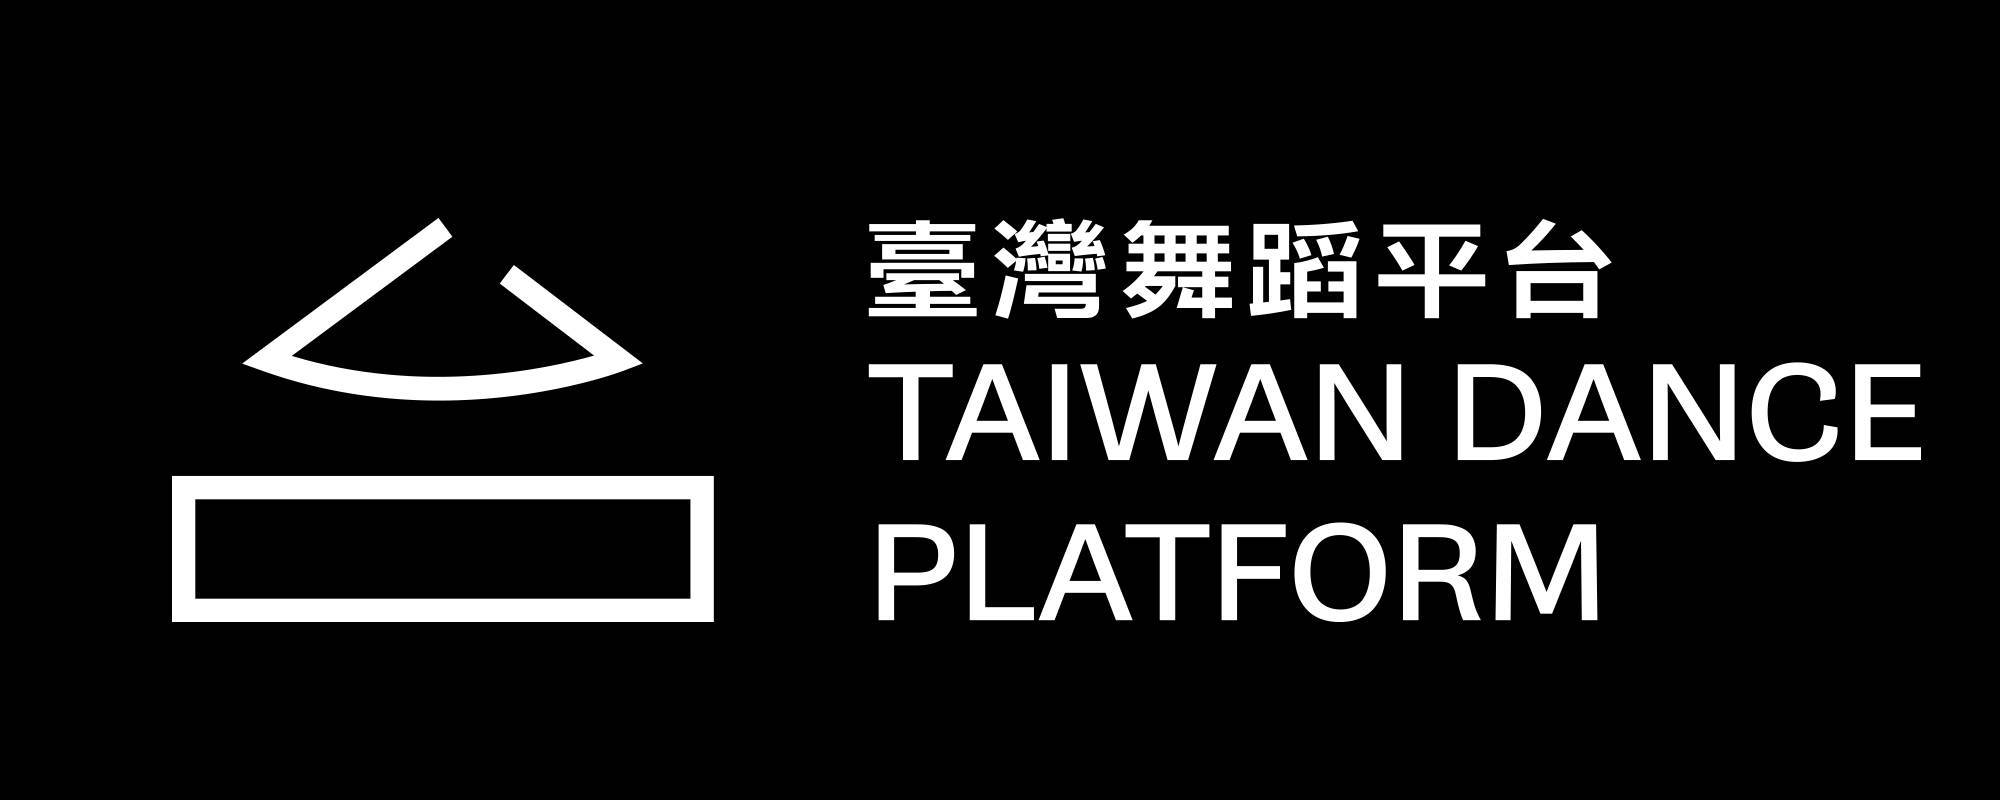 2018 Taiwan Dance Platform－Open Talk series